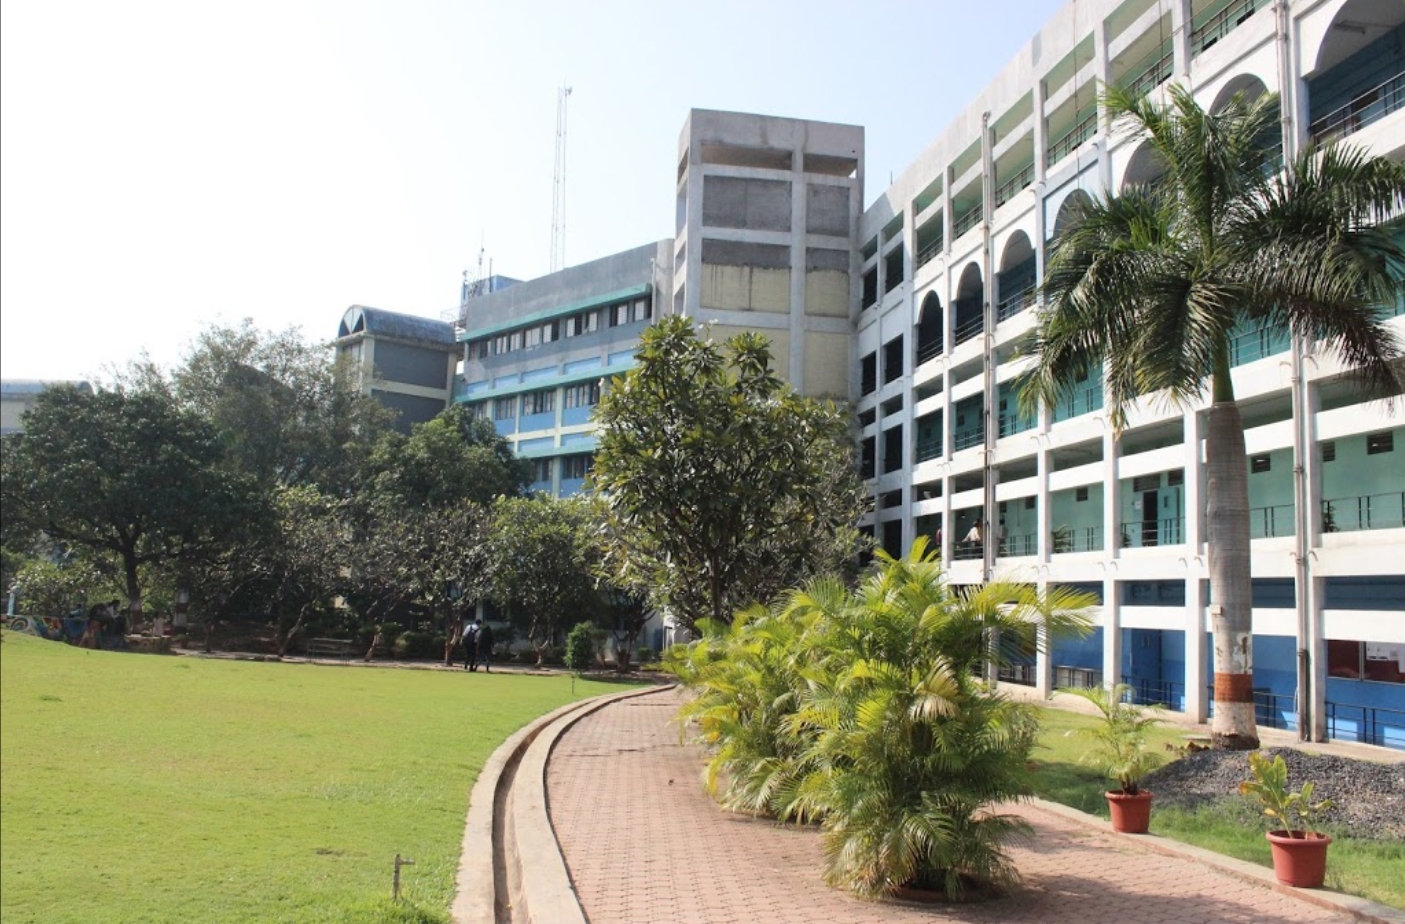 Vishwakarma Institute of Technology